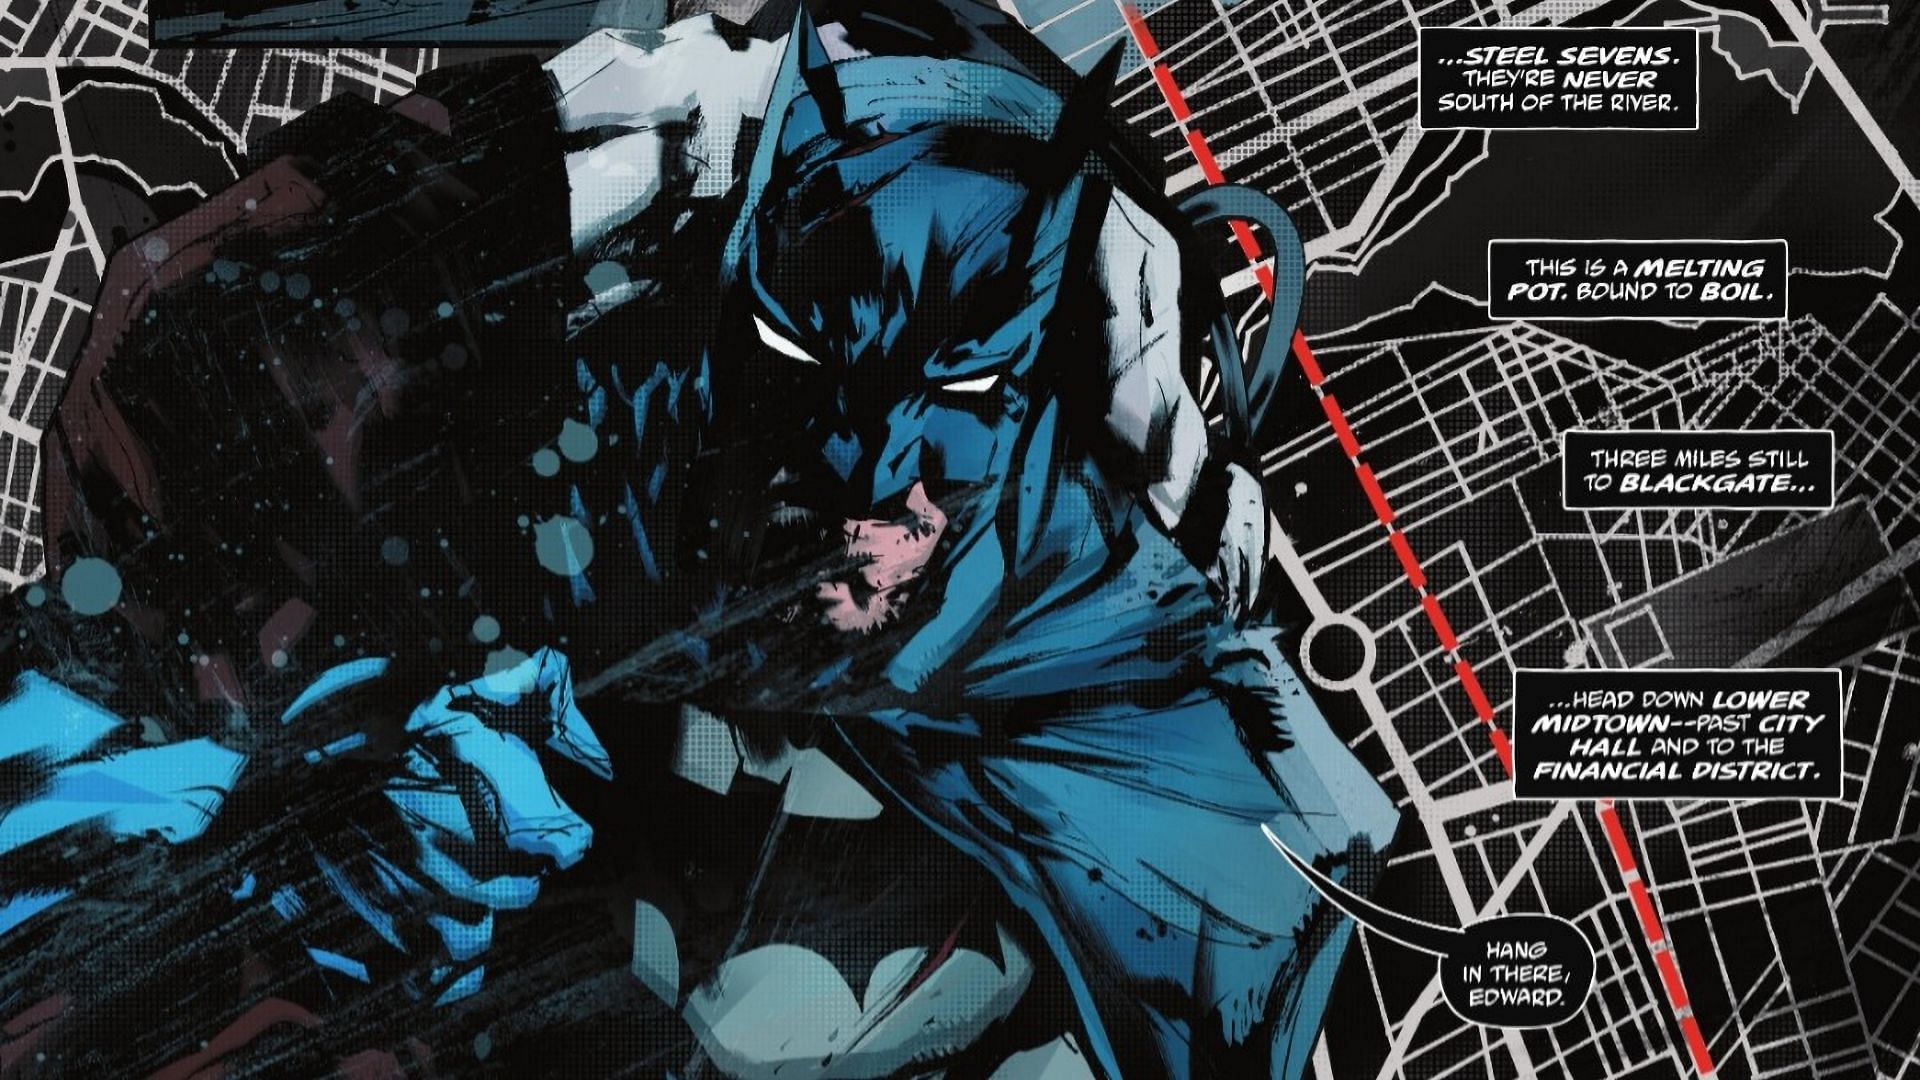 Art from One Dark Knight (Image via DC Comics)